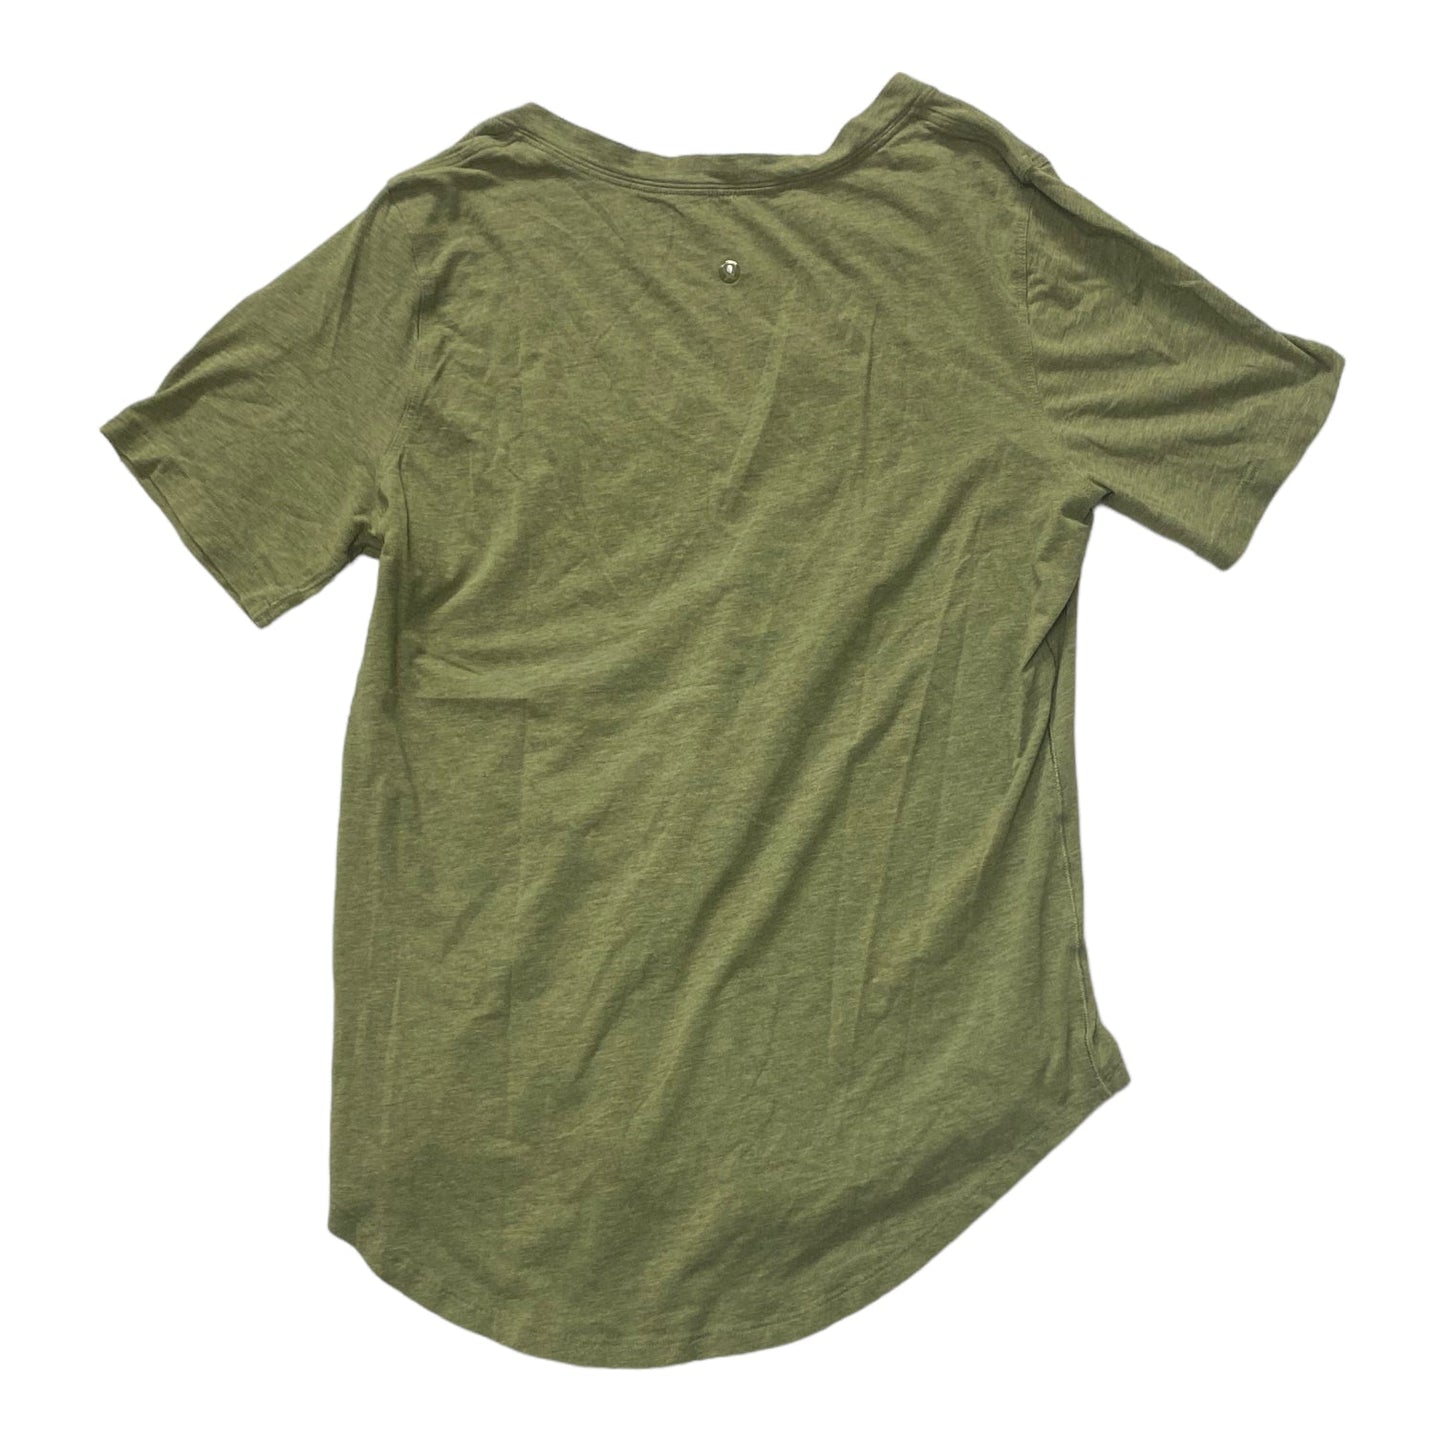 Green Athletic Top Short Sleeve Lululemon, Size L